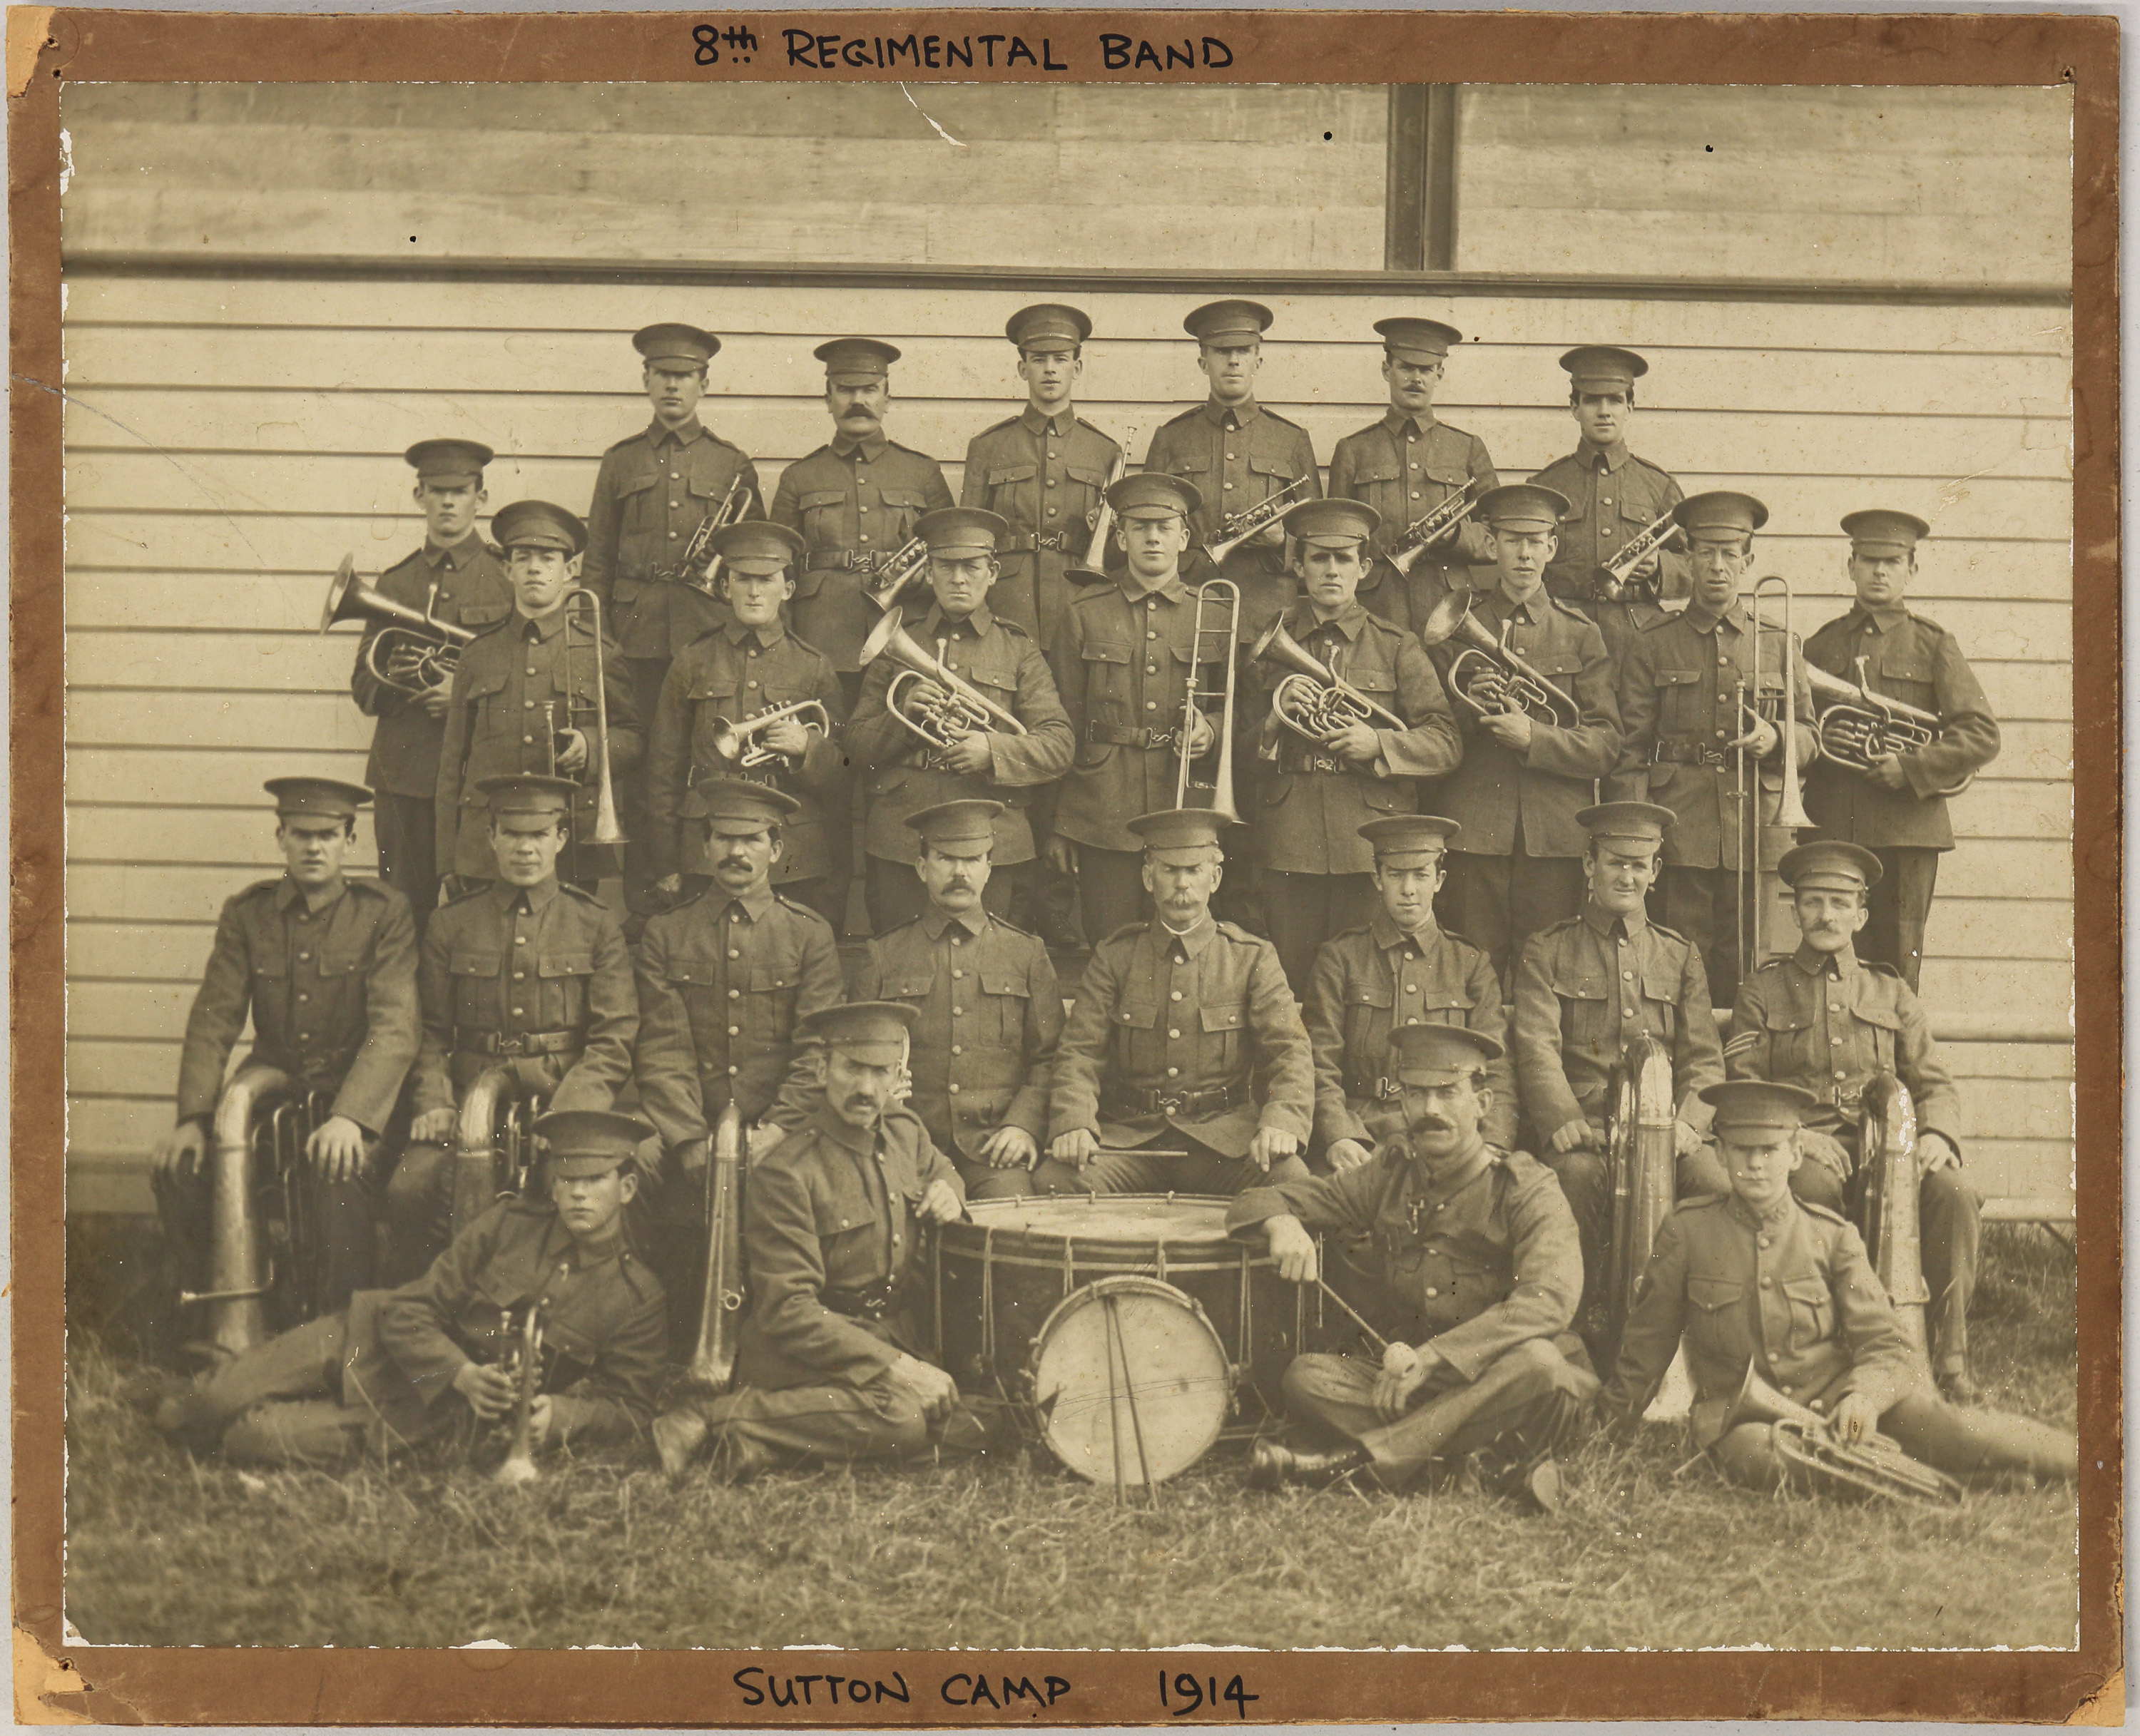 8th Regimental Band.  Sutton Camp 1914.